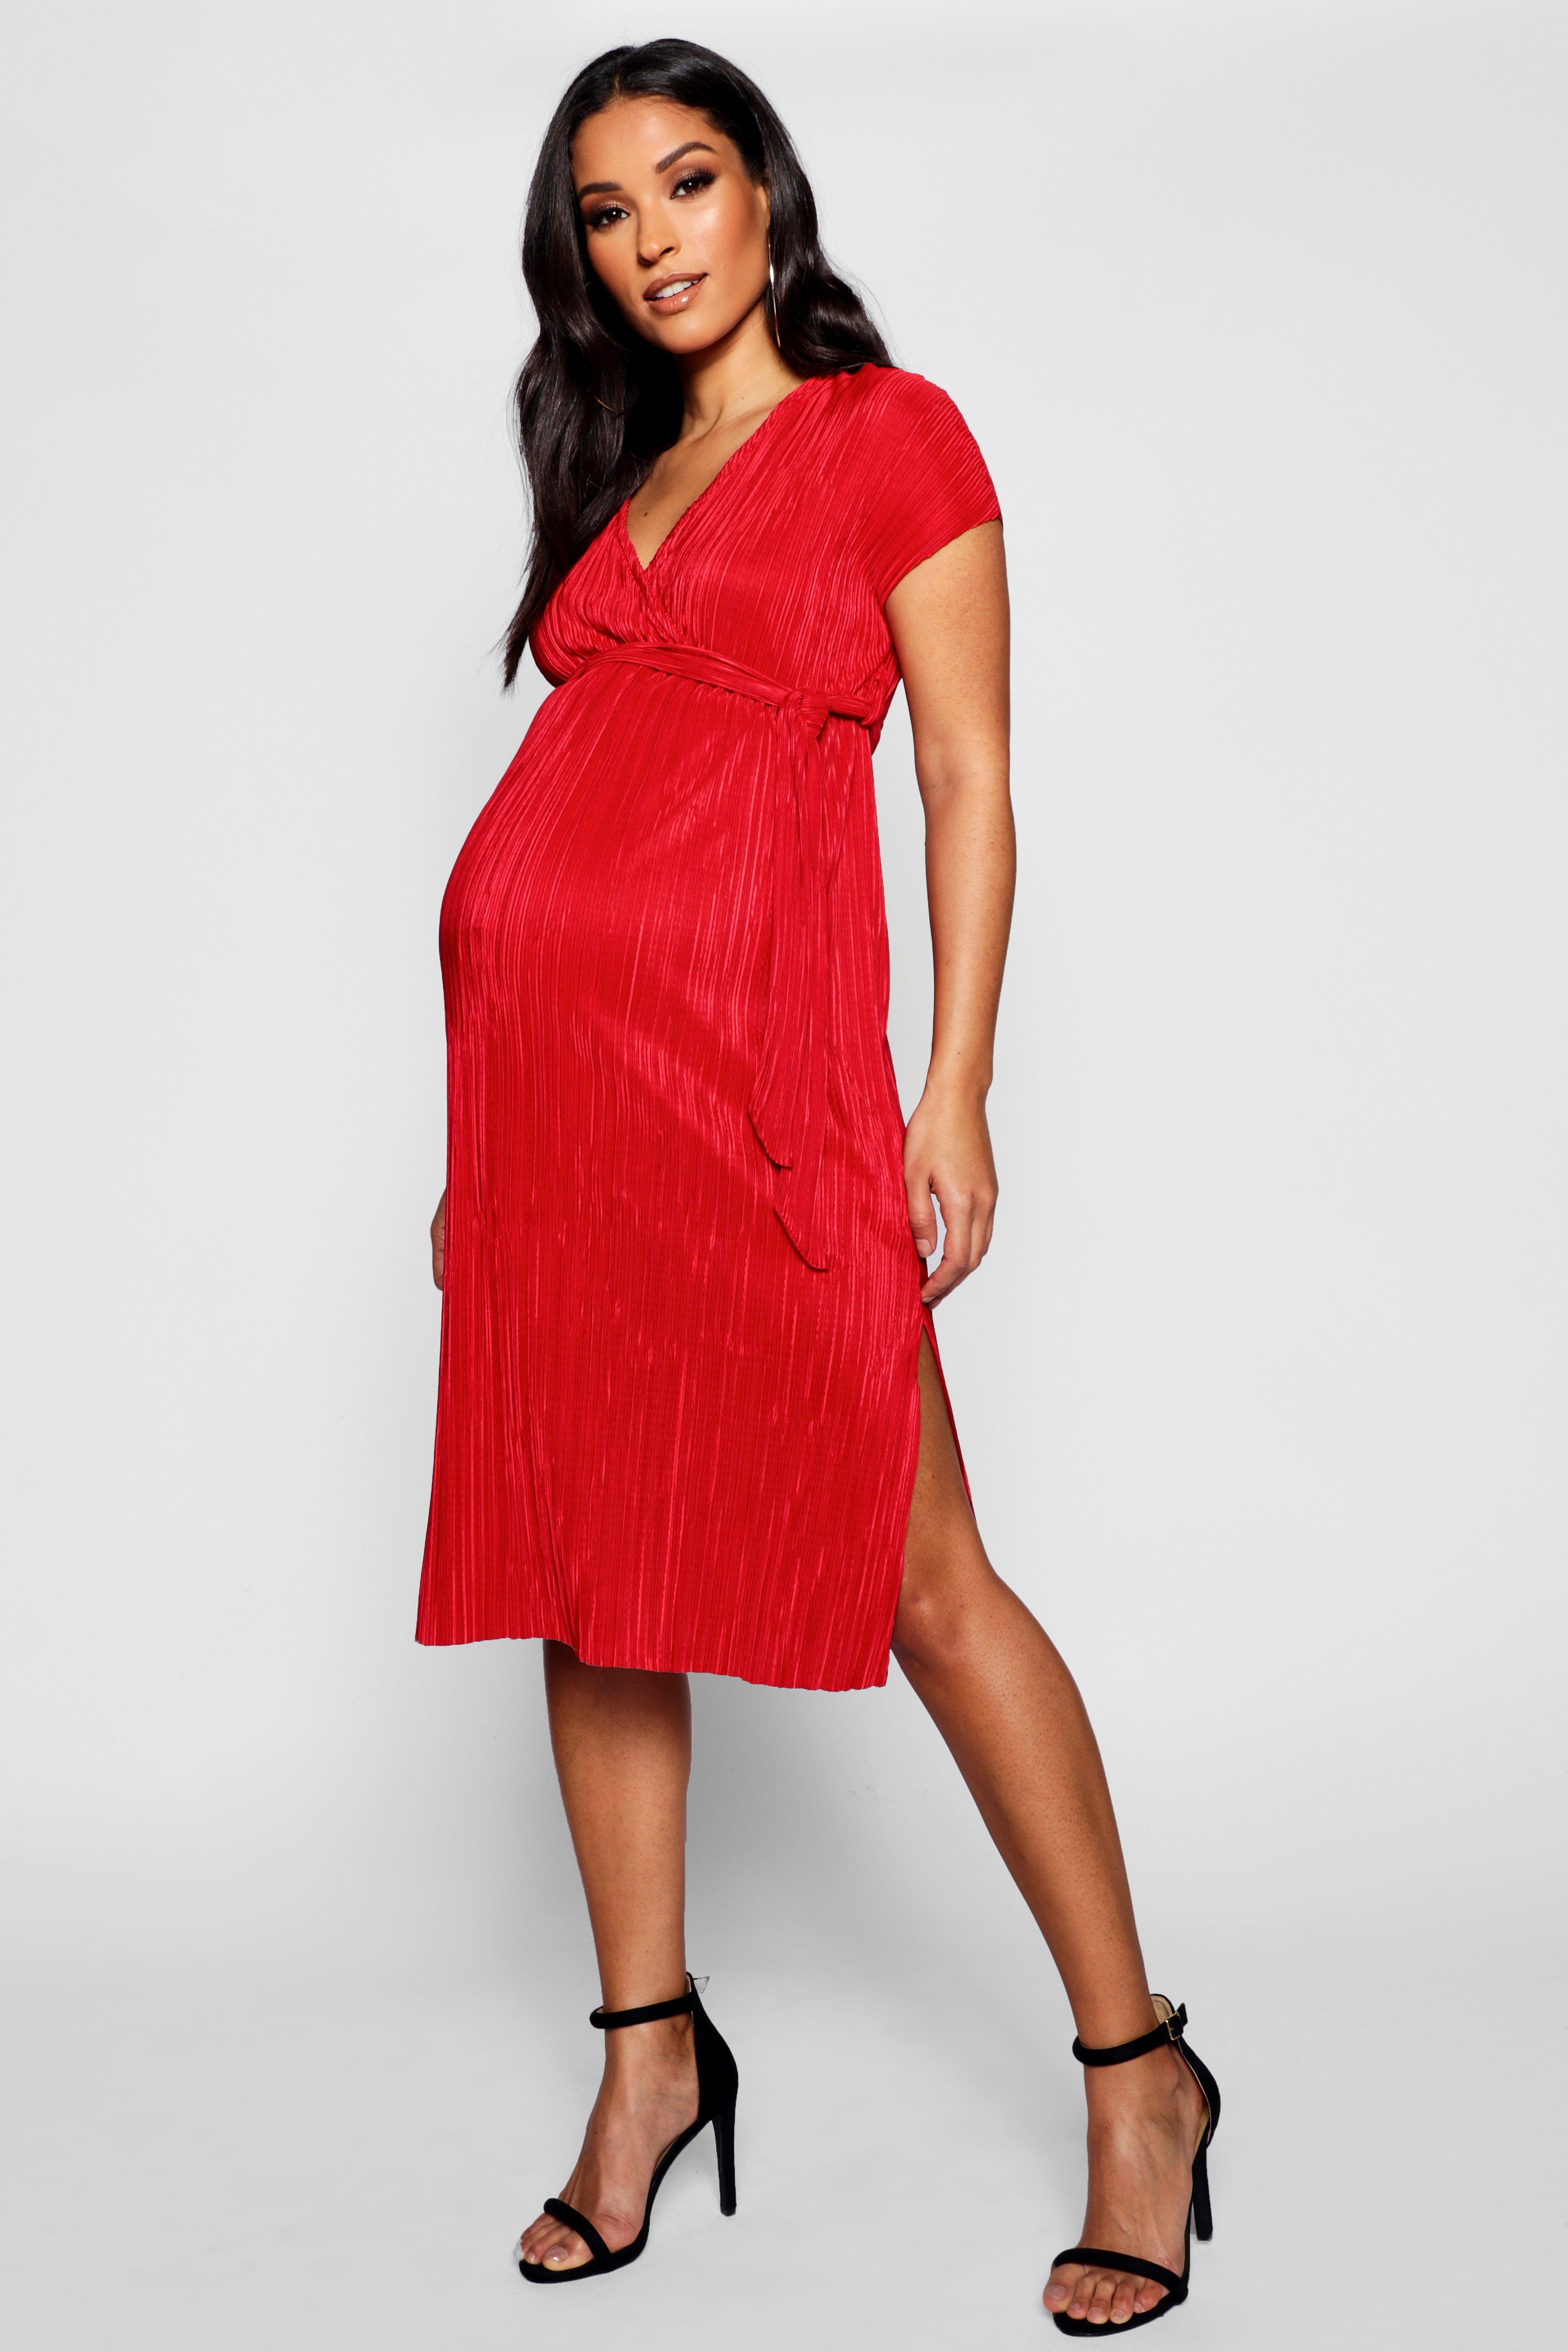 Boohoo Maternity Wrap Midi Dress in Red - Lyst